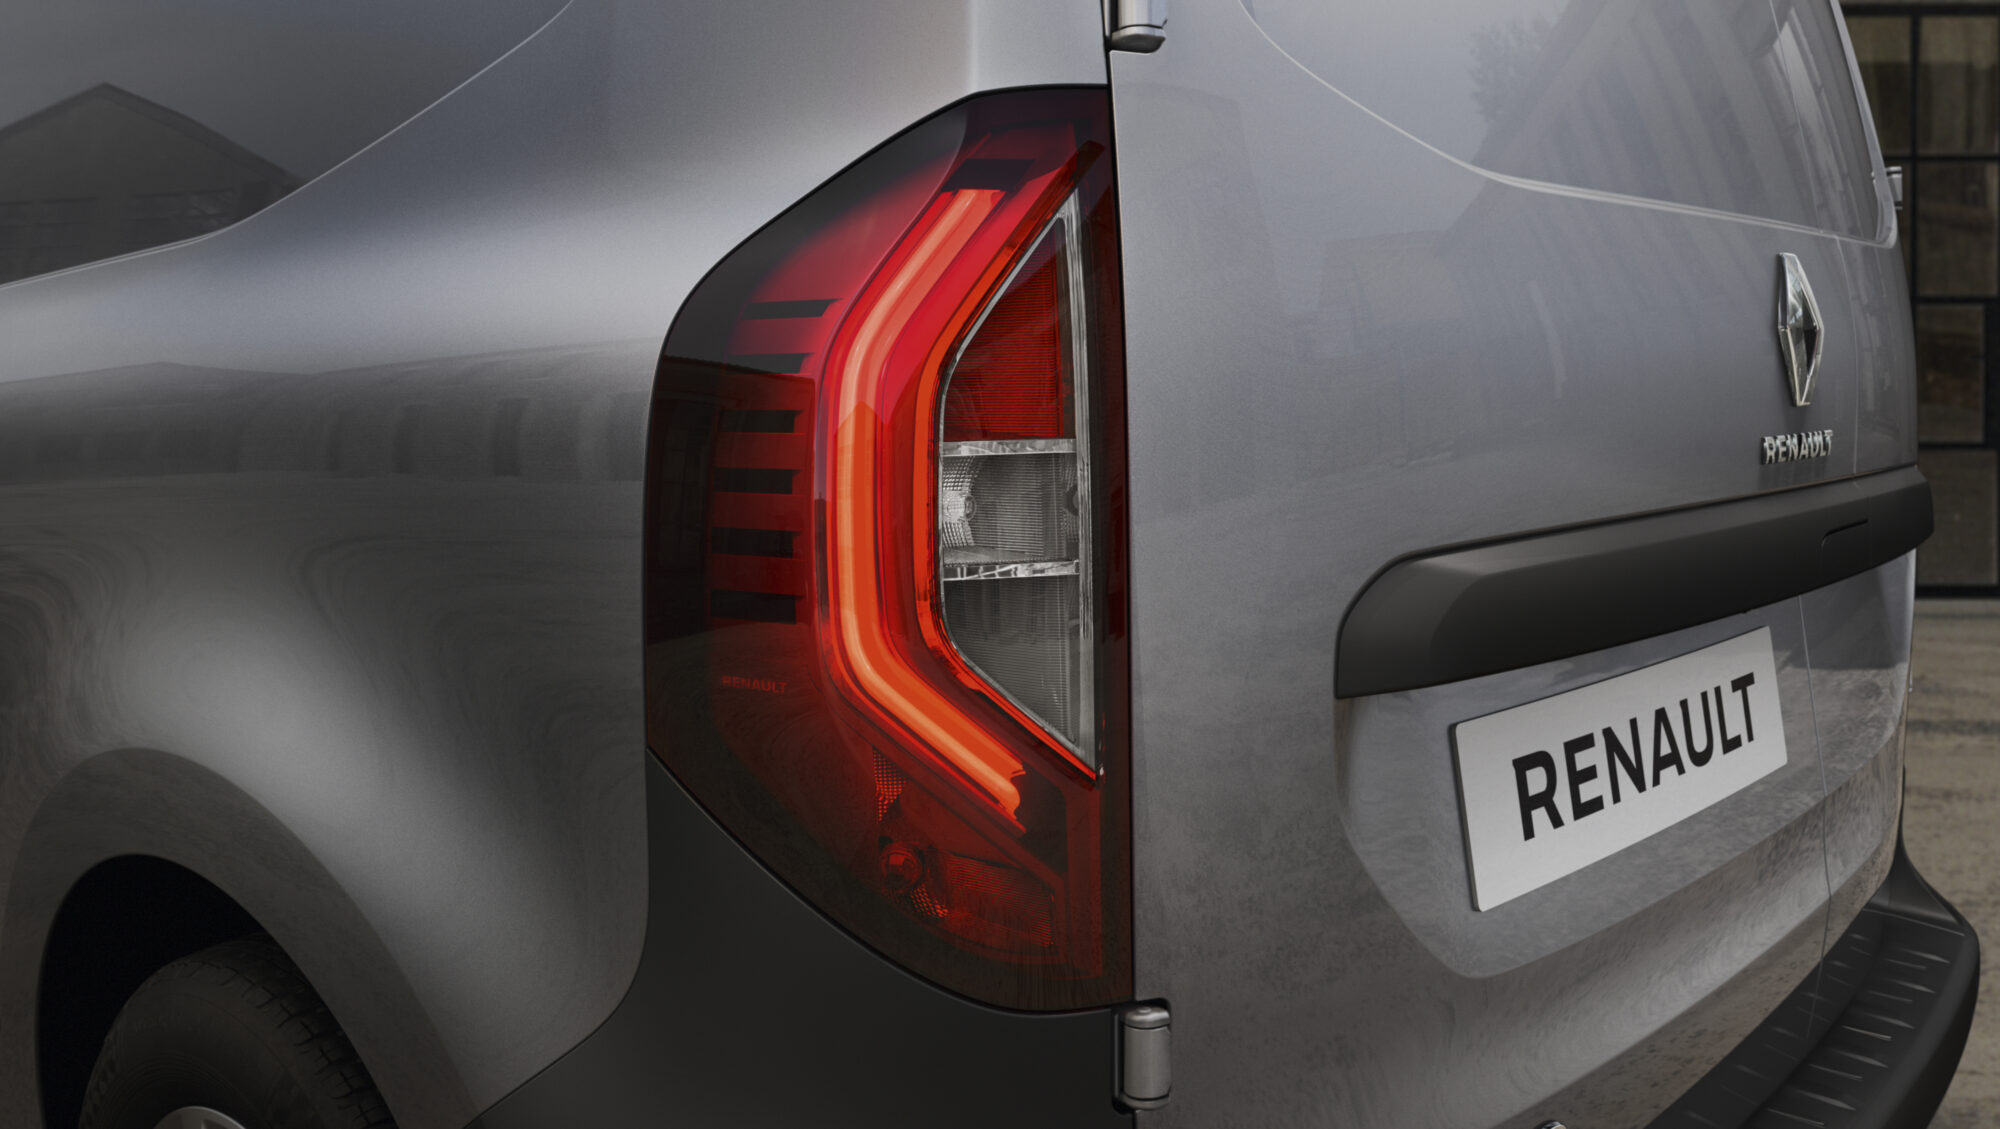 2021 - New Renault Kangoo Van on location